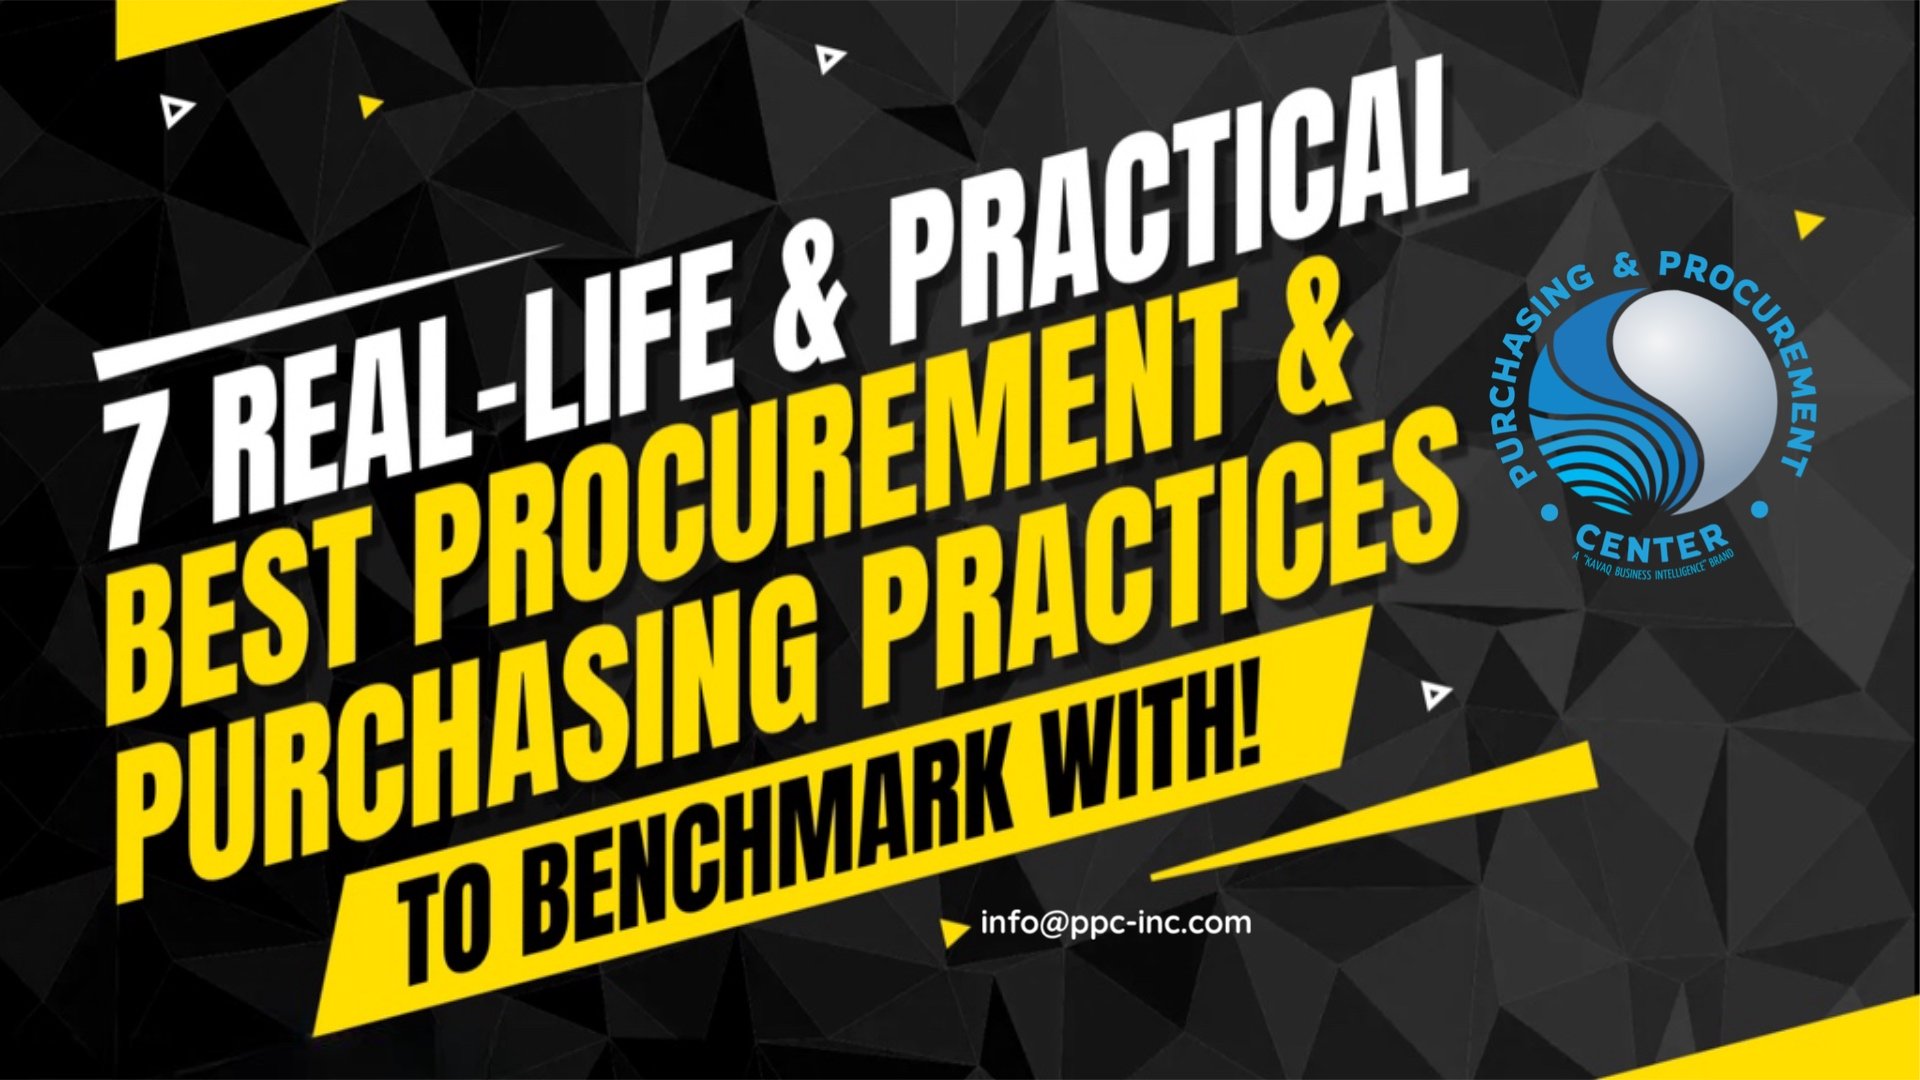 7-real-life-practical-best-procurement